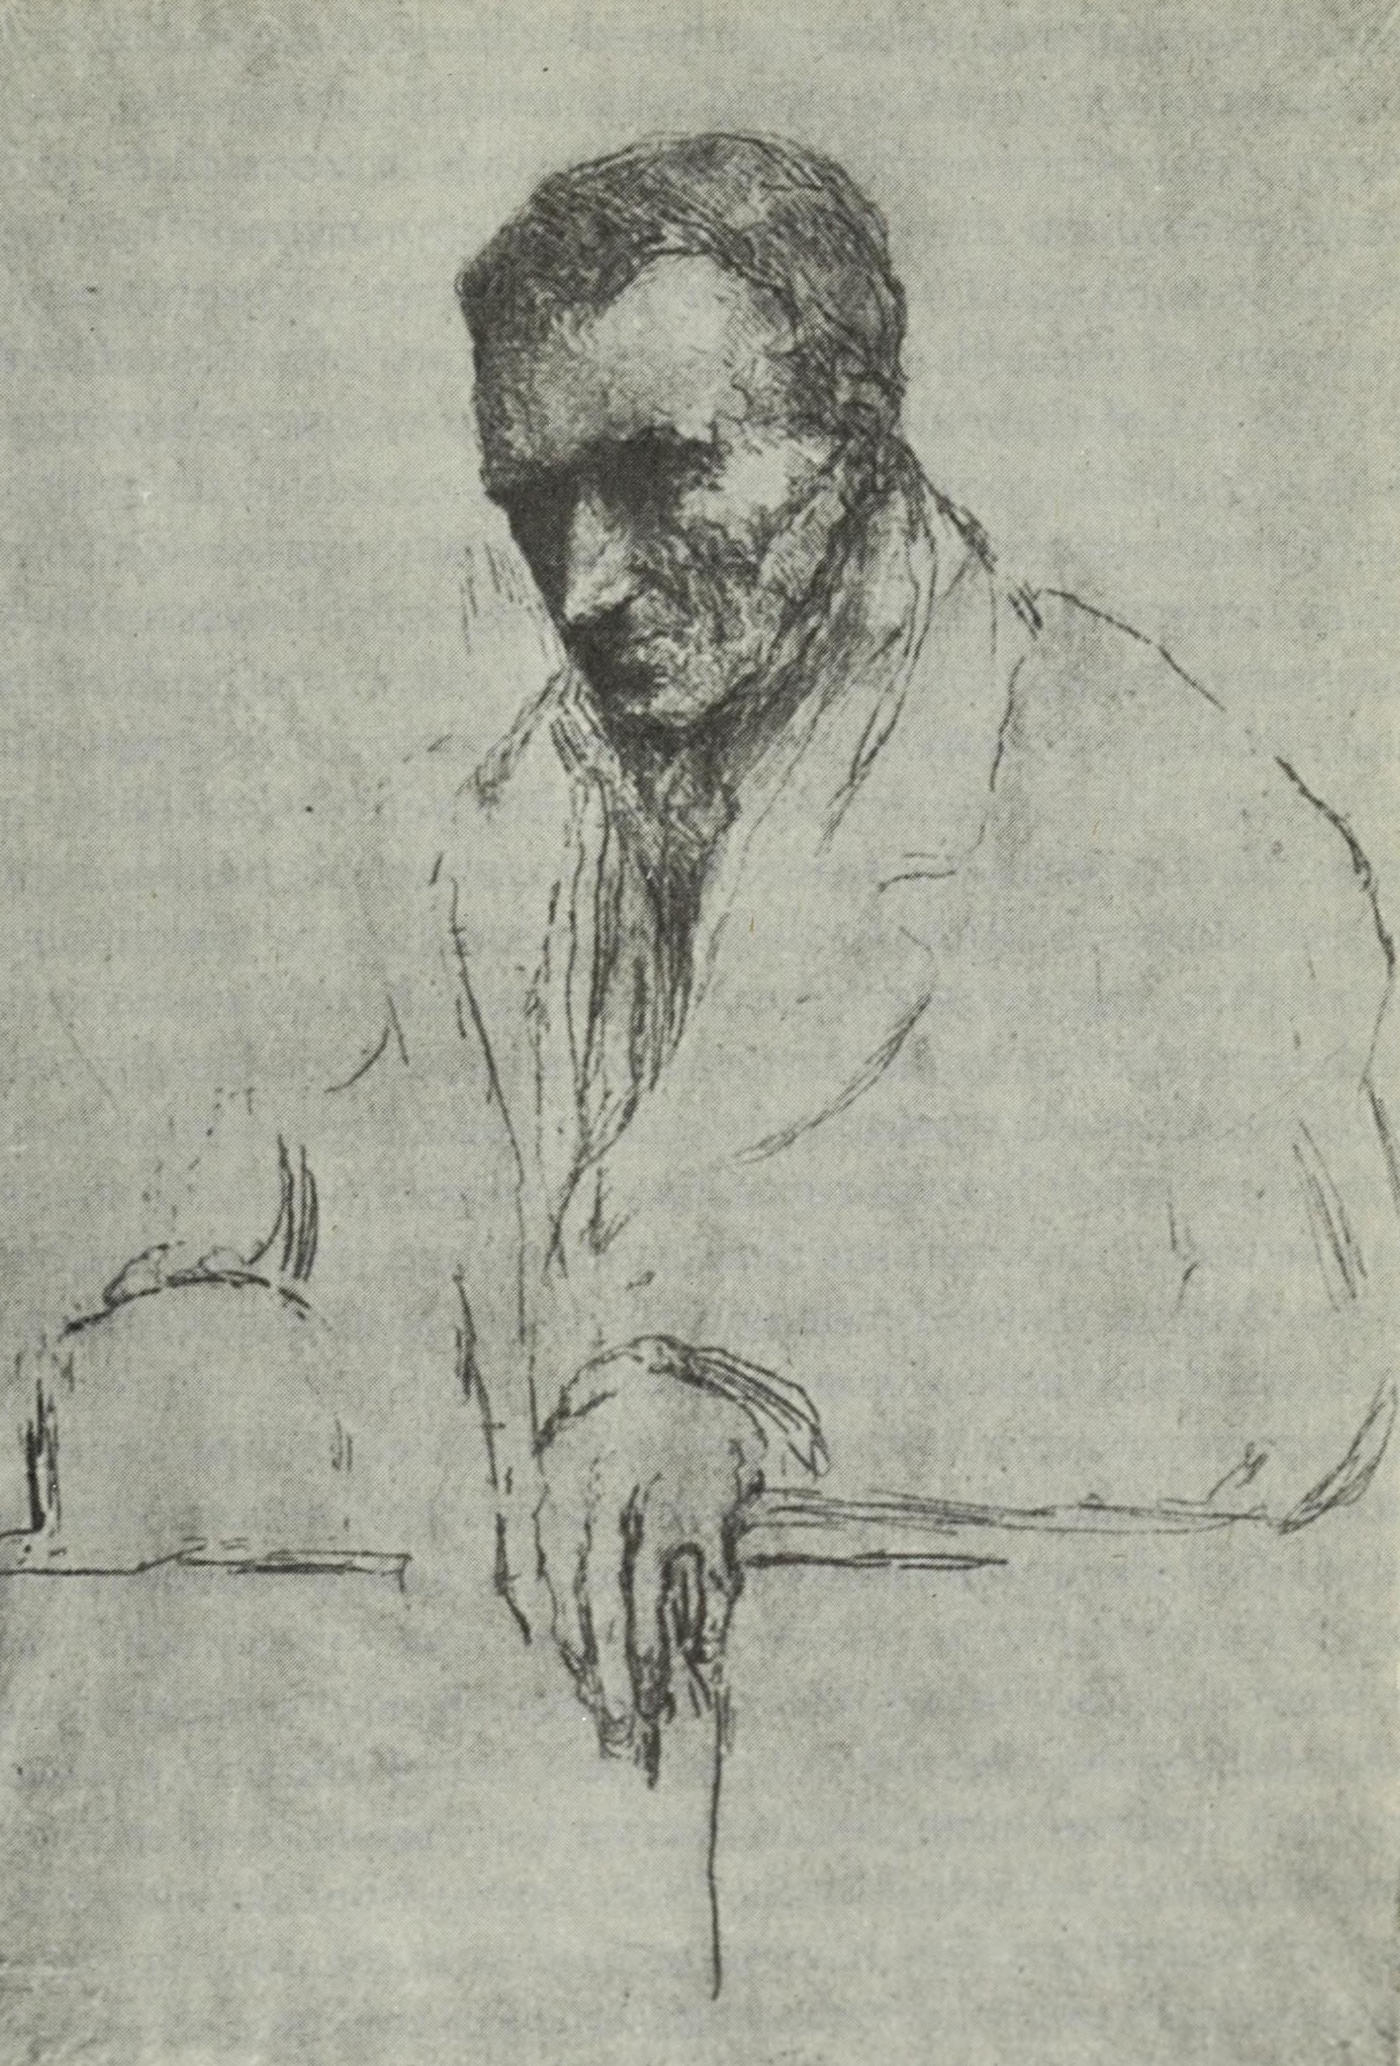 A portrait illustration of an old man.